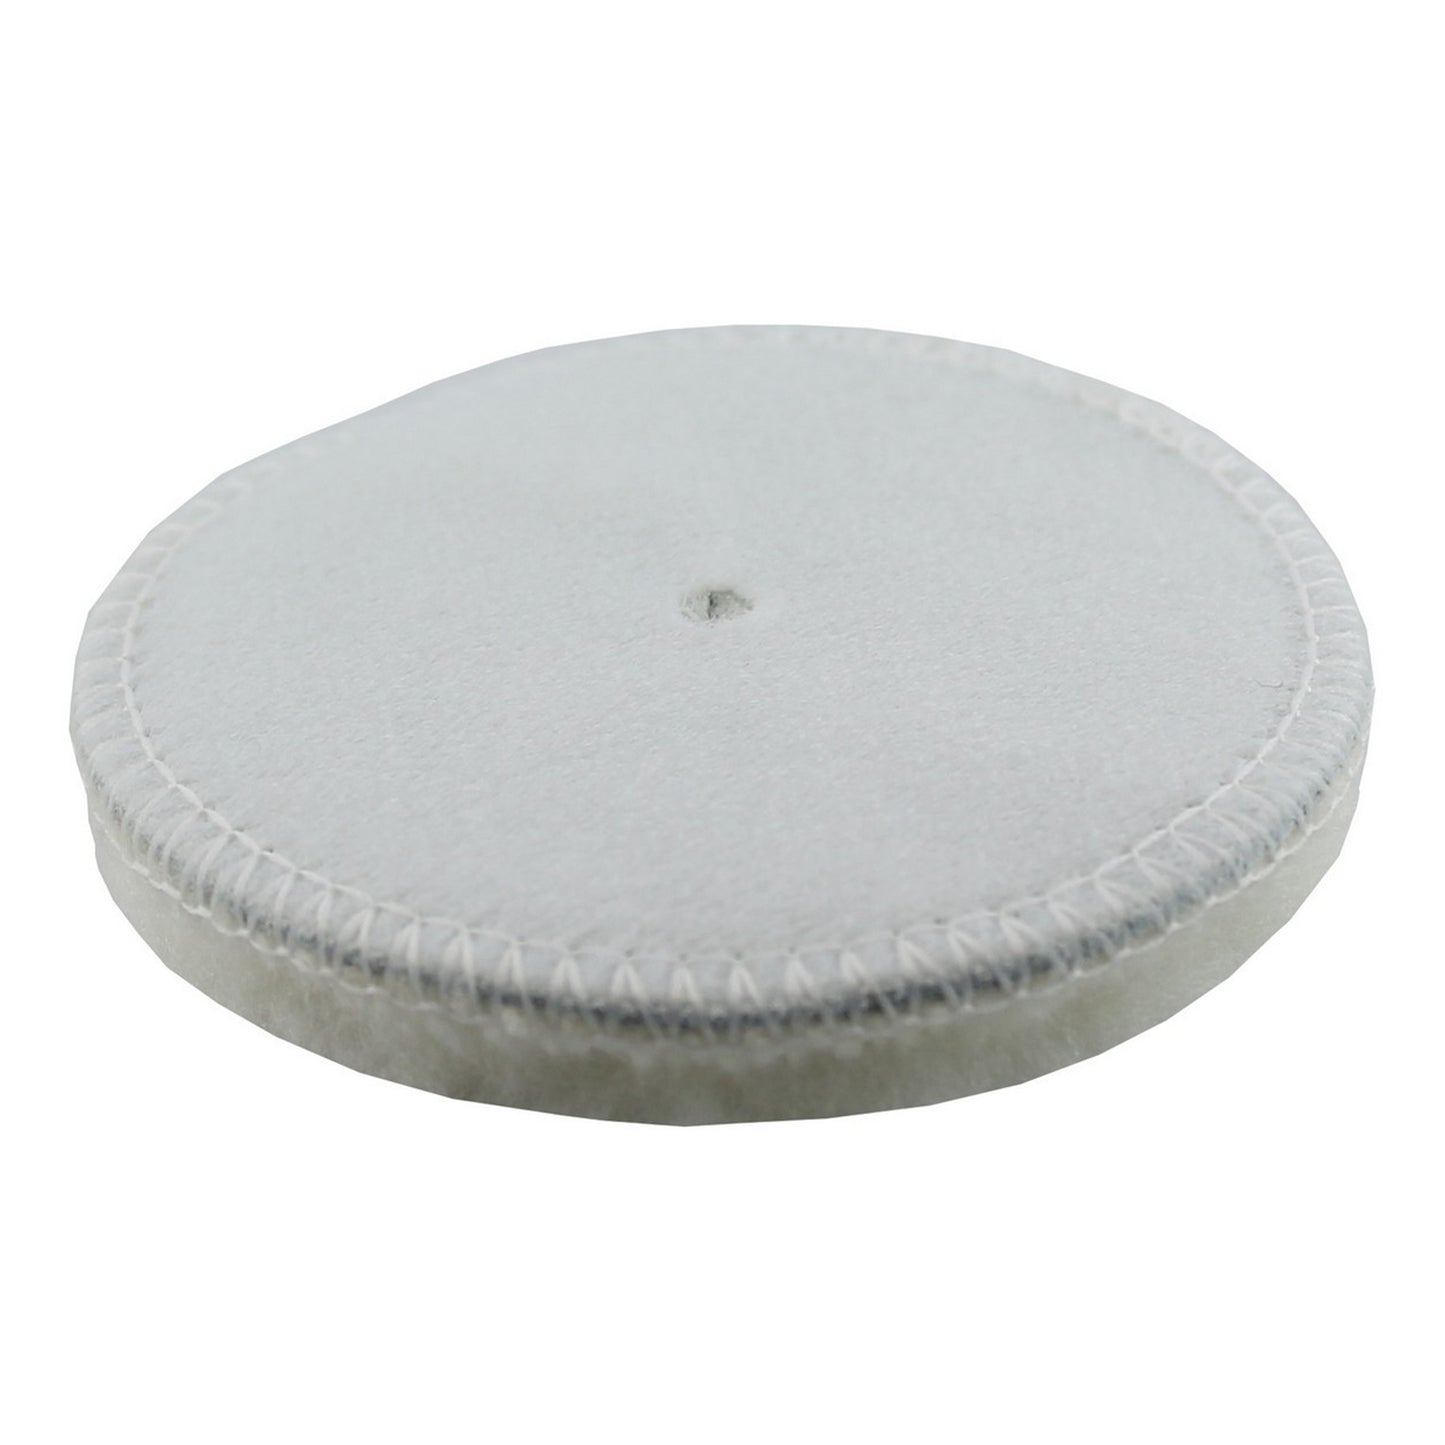 CLEANPRODUCTS Lammfell-Polierpad Weiß 80 mm Durchmesser - 10 Stück